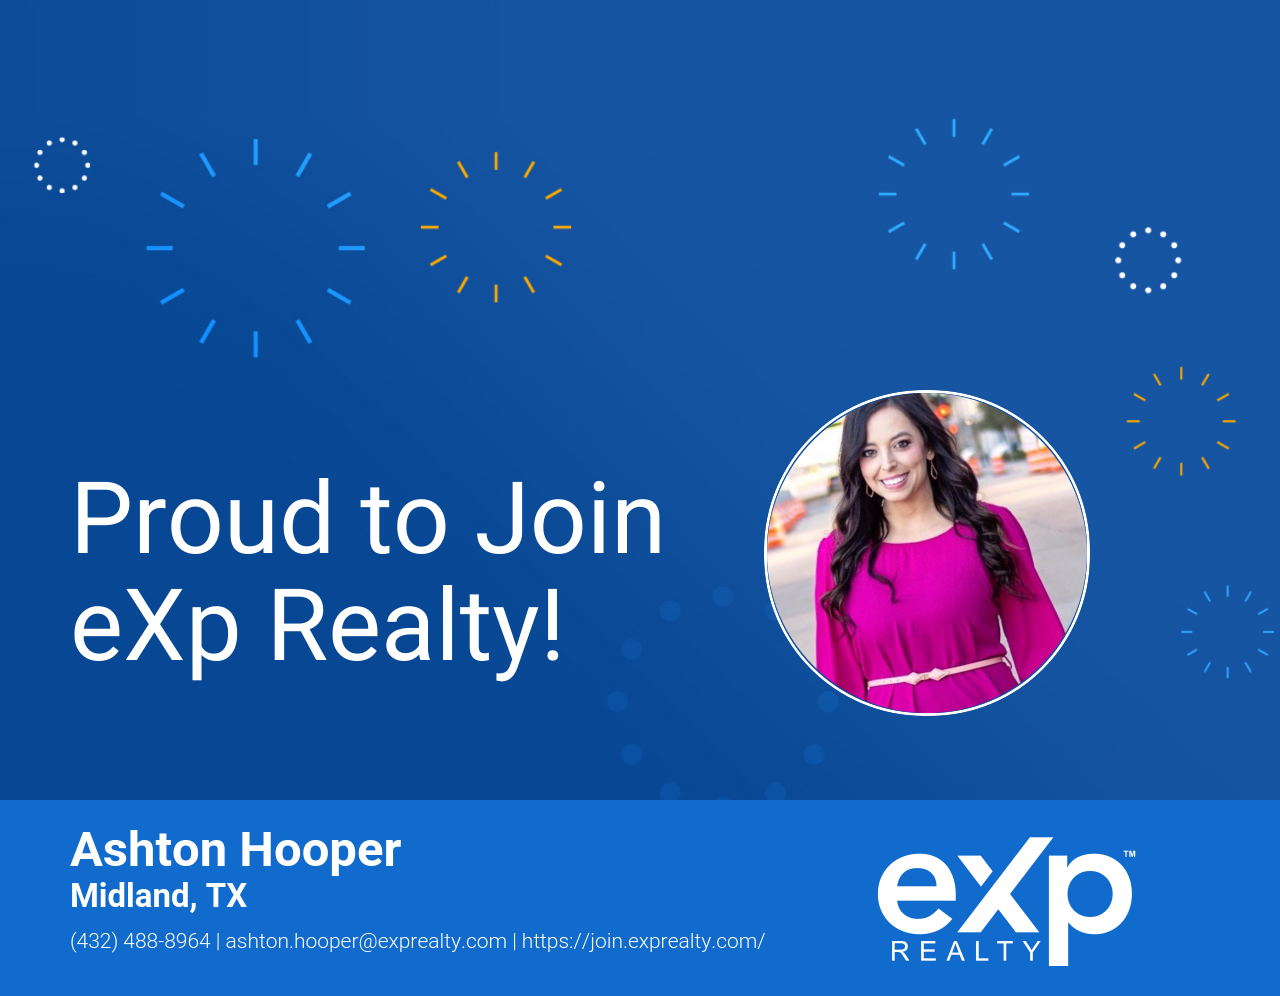 eXp Realty Welcomes Ashton Hooper!